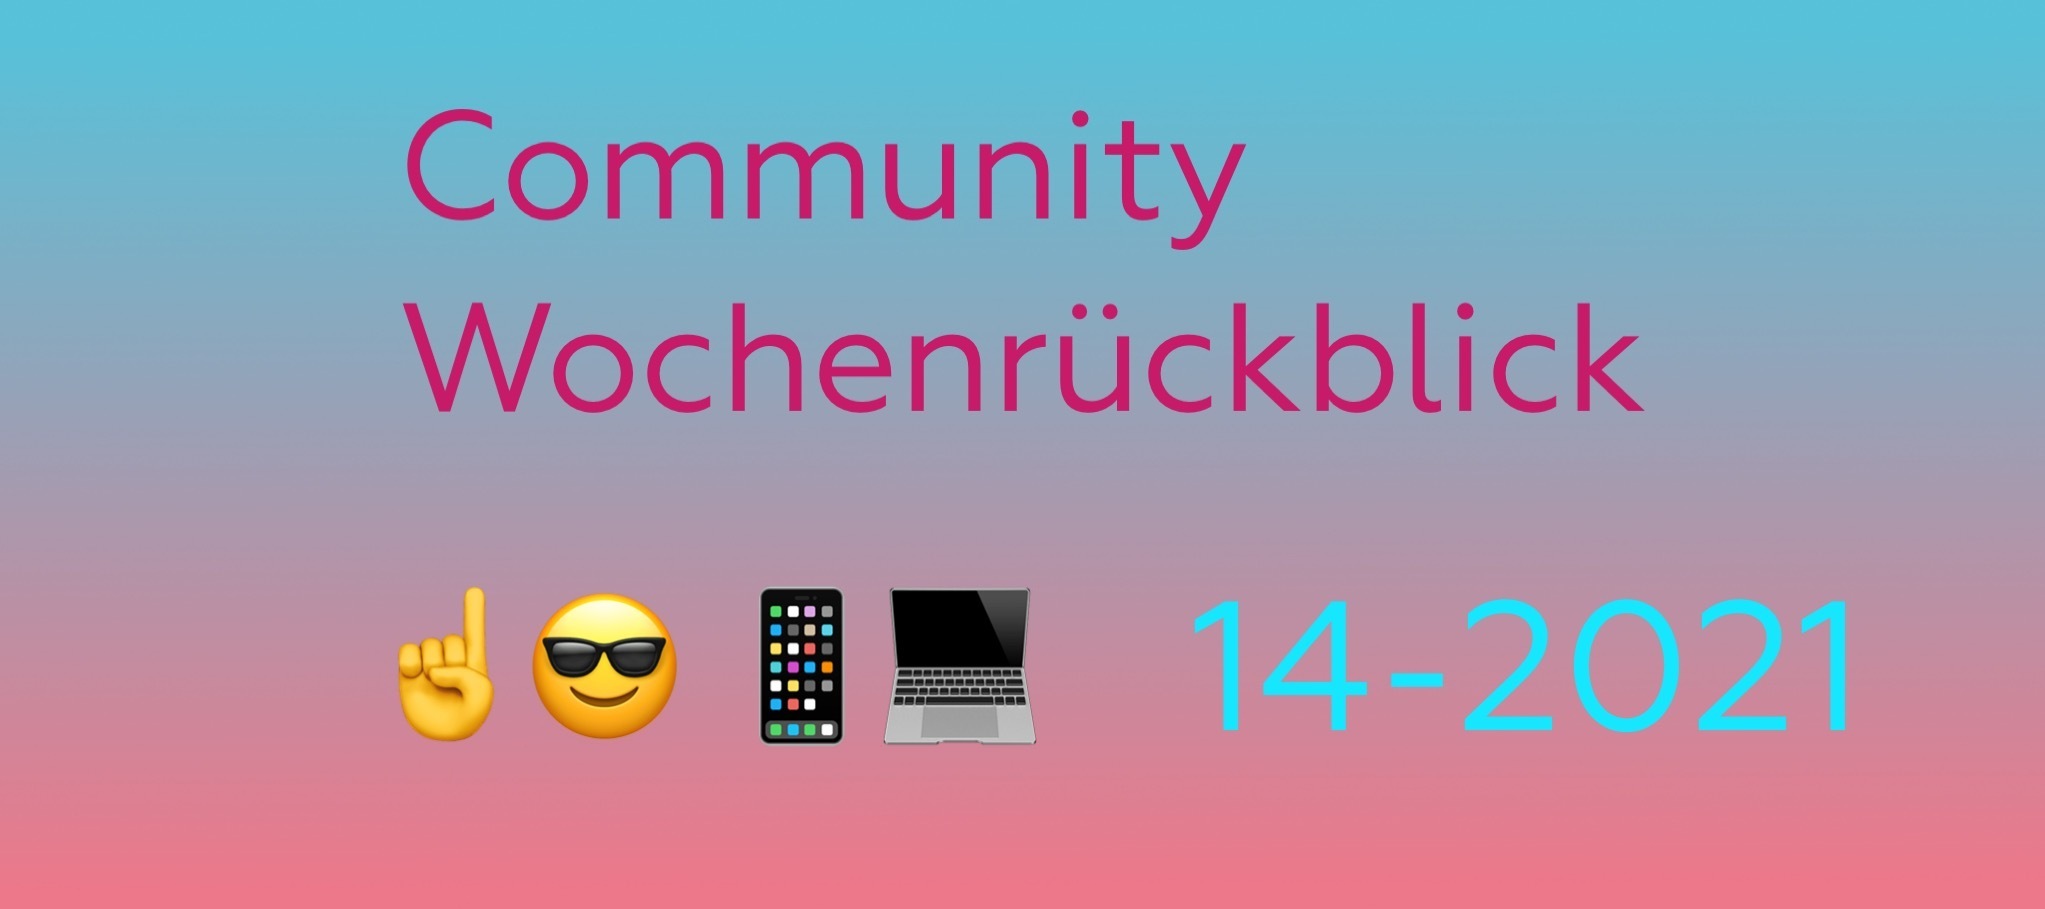 Community Wochenrückblick #14/2021